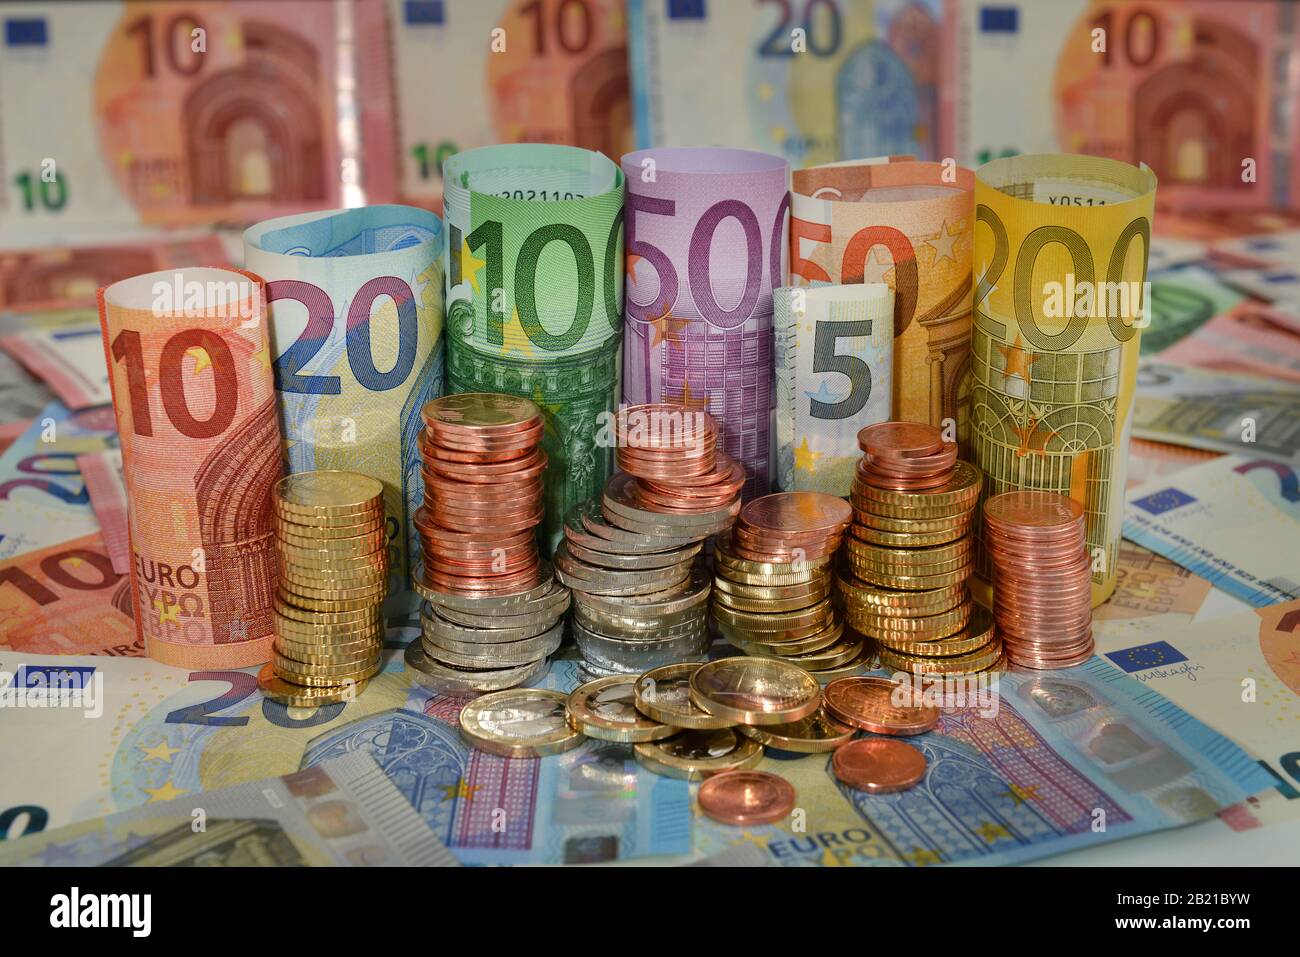 Centmuenzen, Euromuenzen, Euroscheine Stock Photo